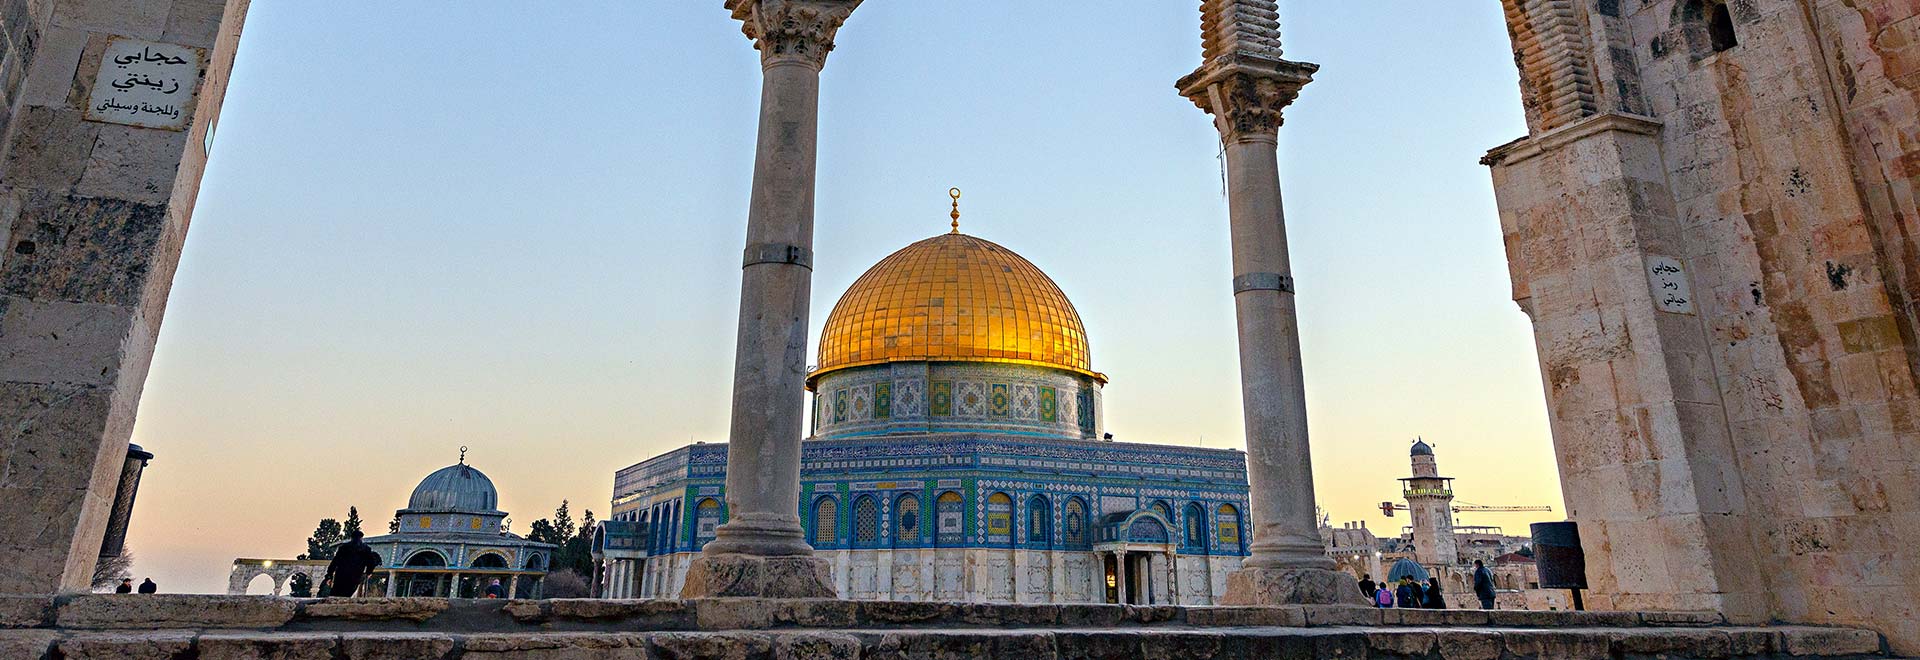 Middle East Israel Jerusalem Dome of the Rock